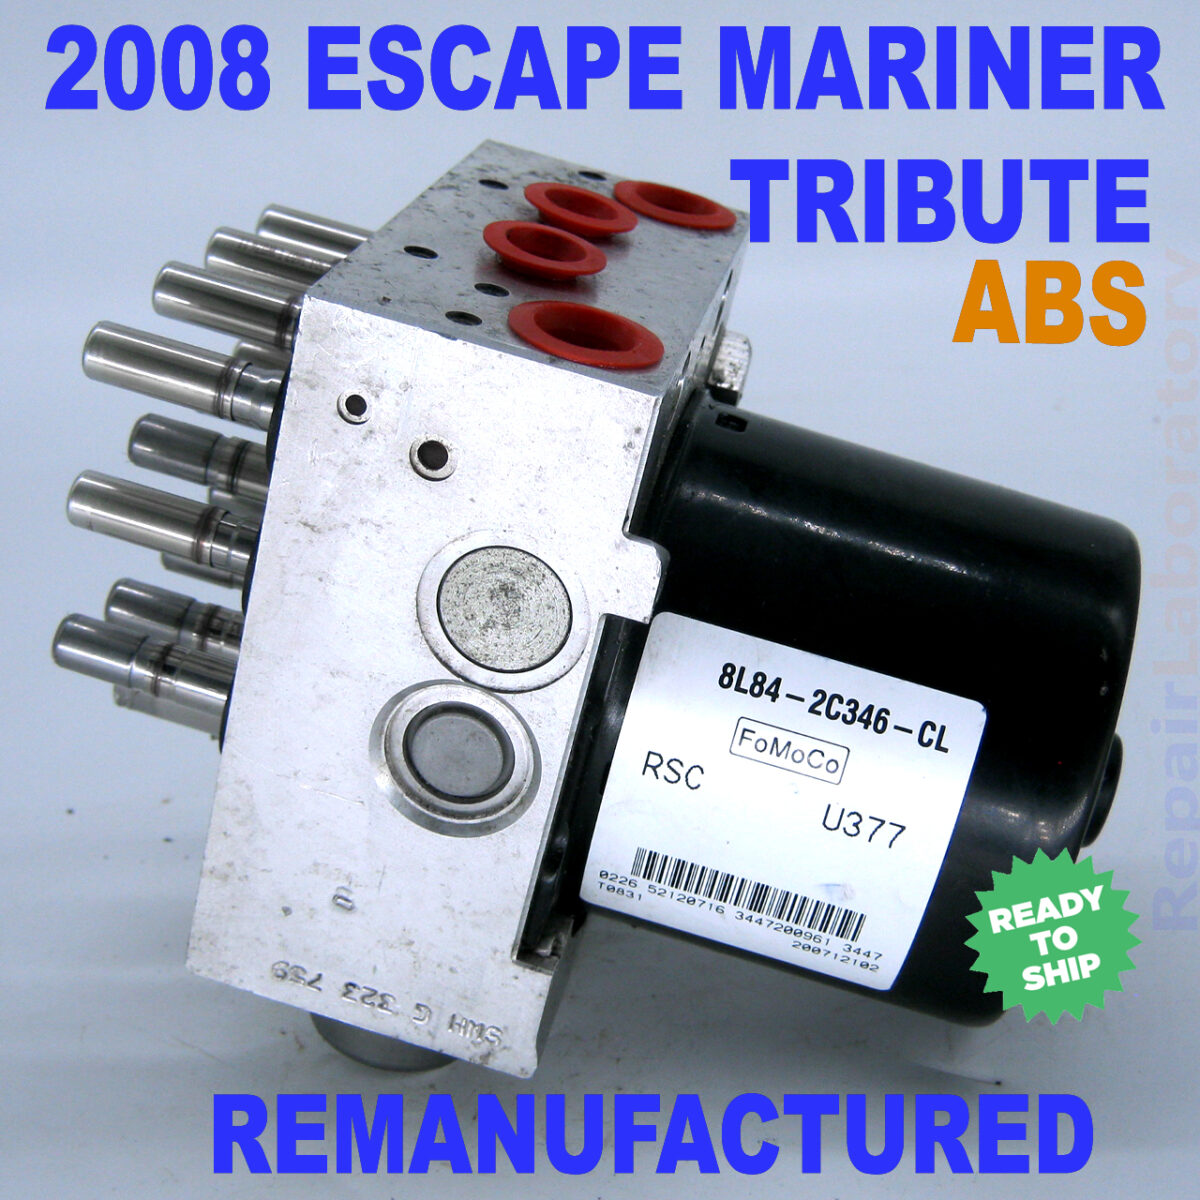 2008_escape_mariner_tribute_abs_hydraulic_unit_8L84-2C346-CL